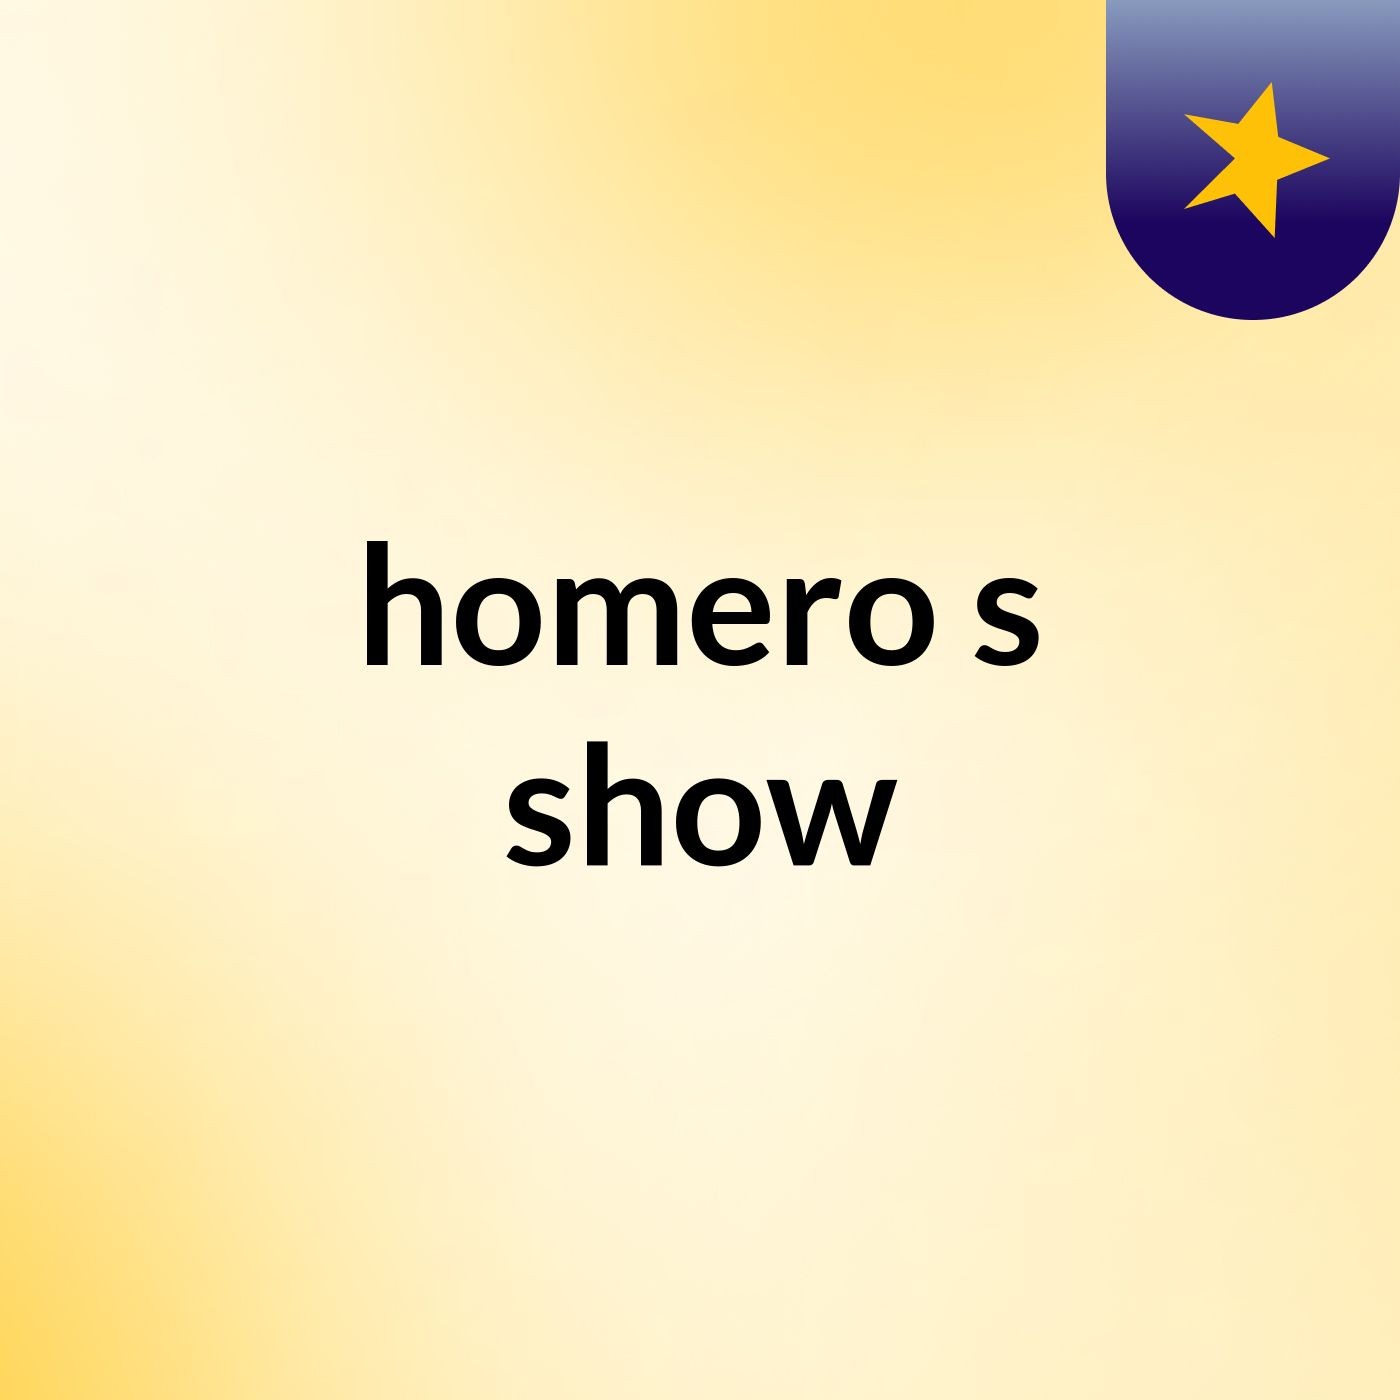 homero's show